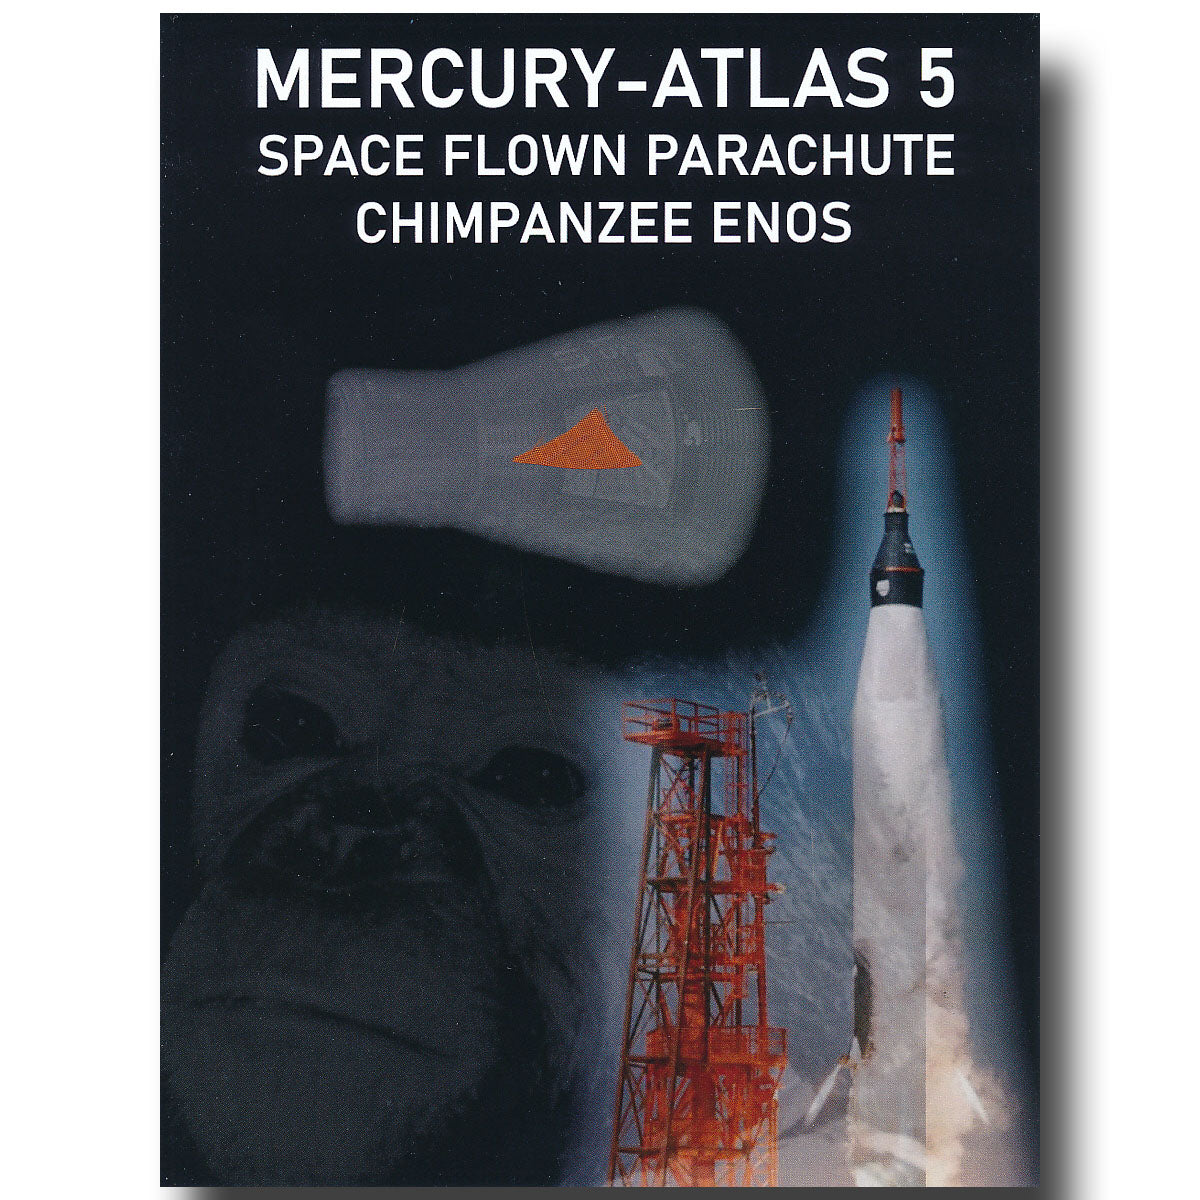 Mercury MA-5 Chimp Enos SPACE FLOWN parachute presentation